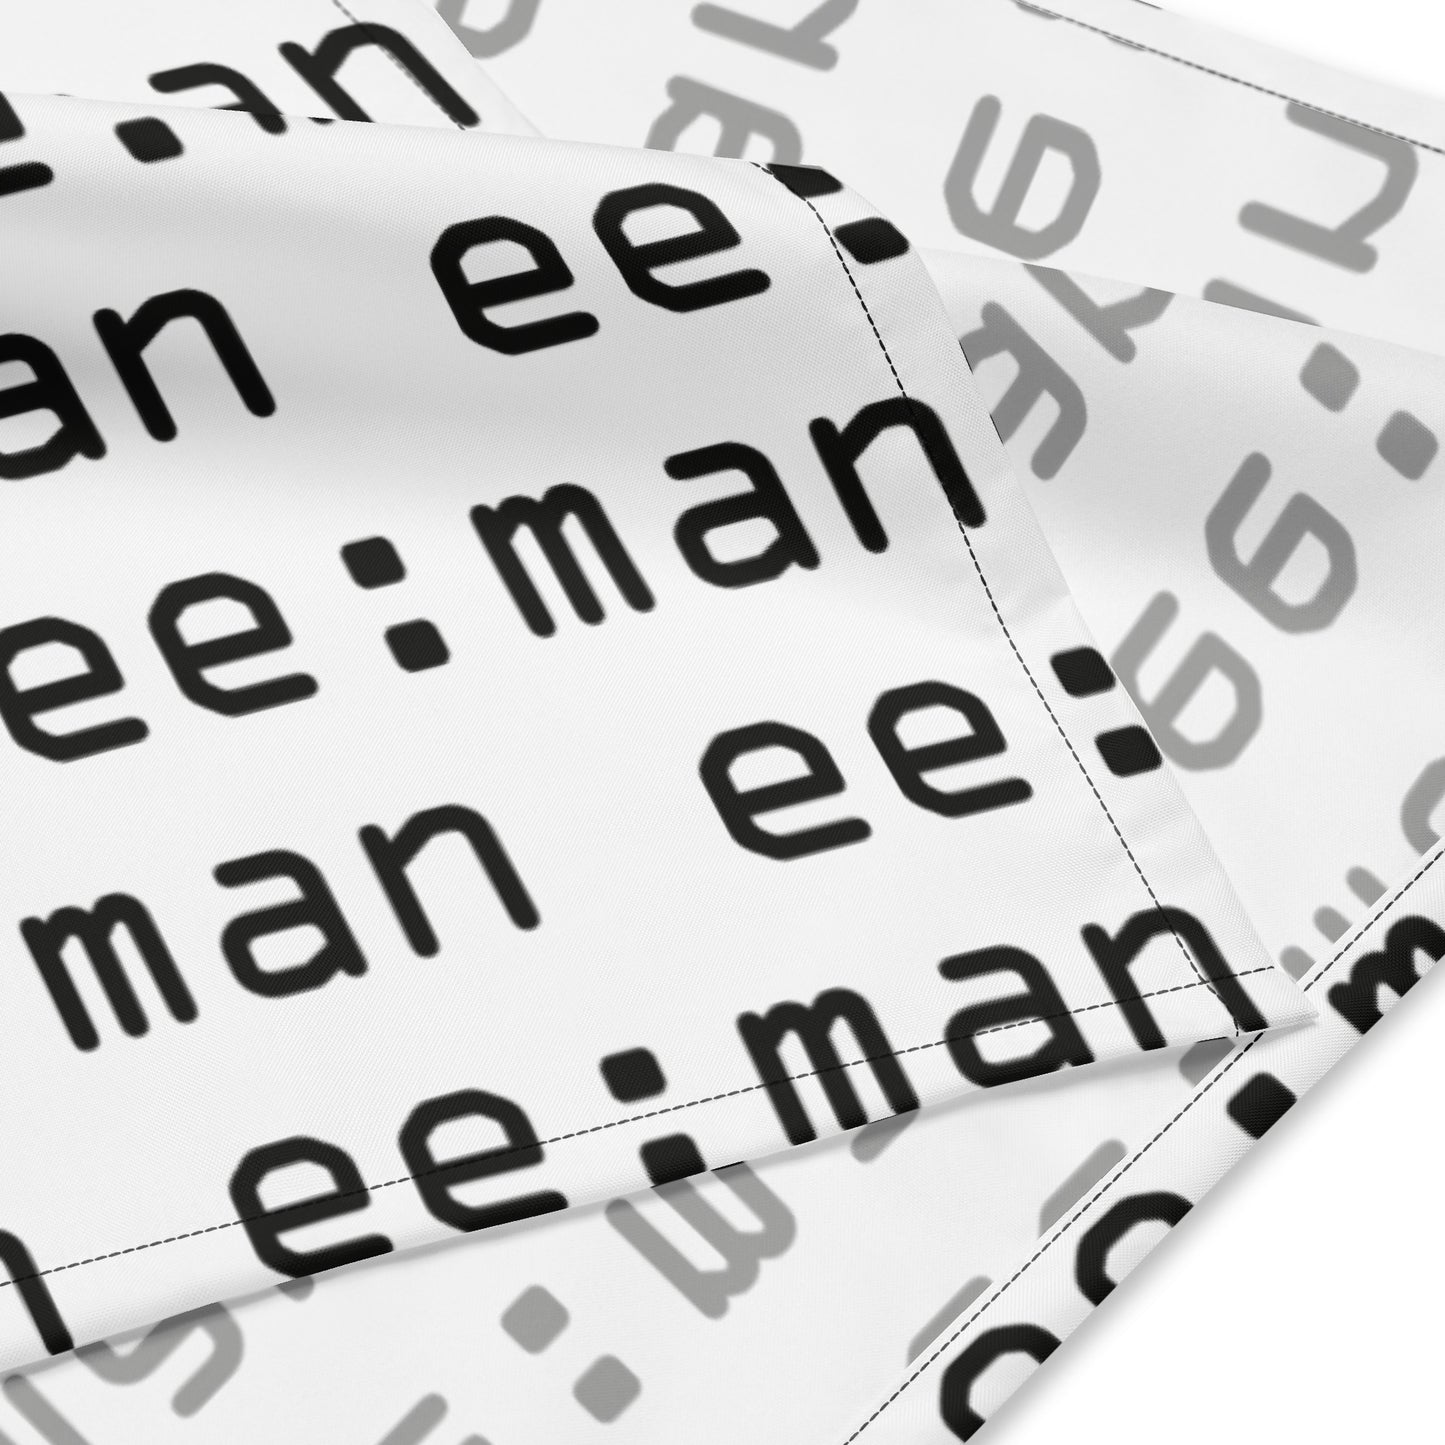 ee:man, official logo, All-over print bandana